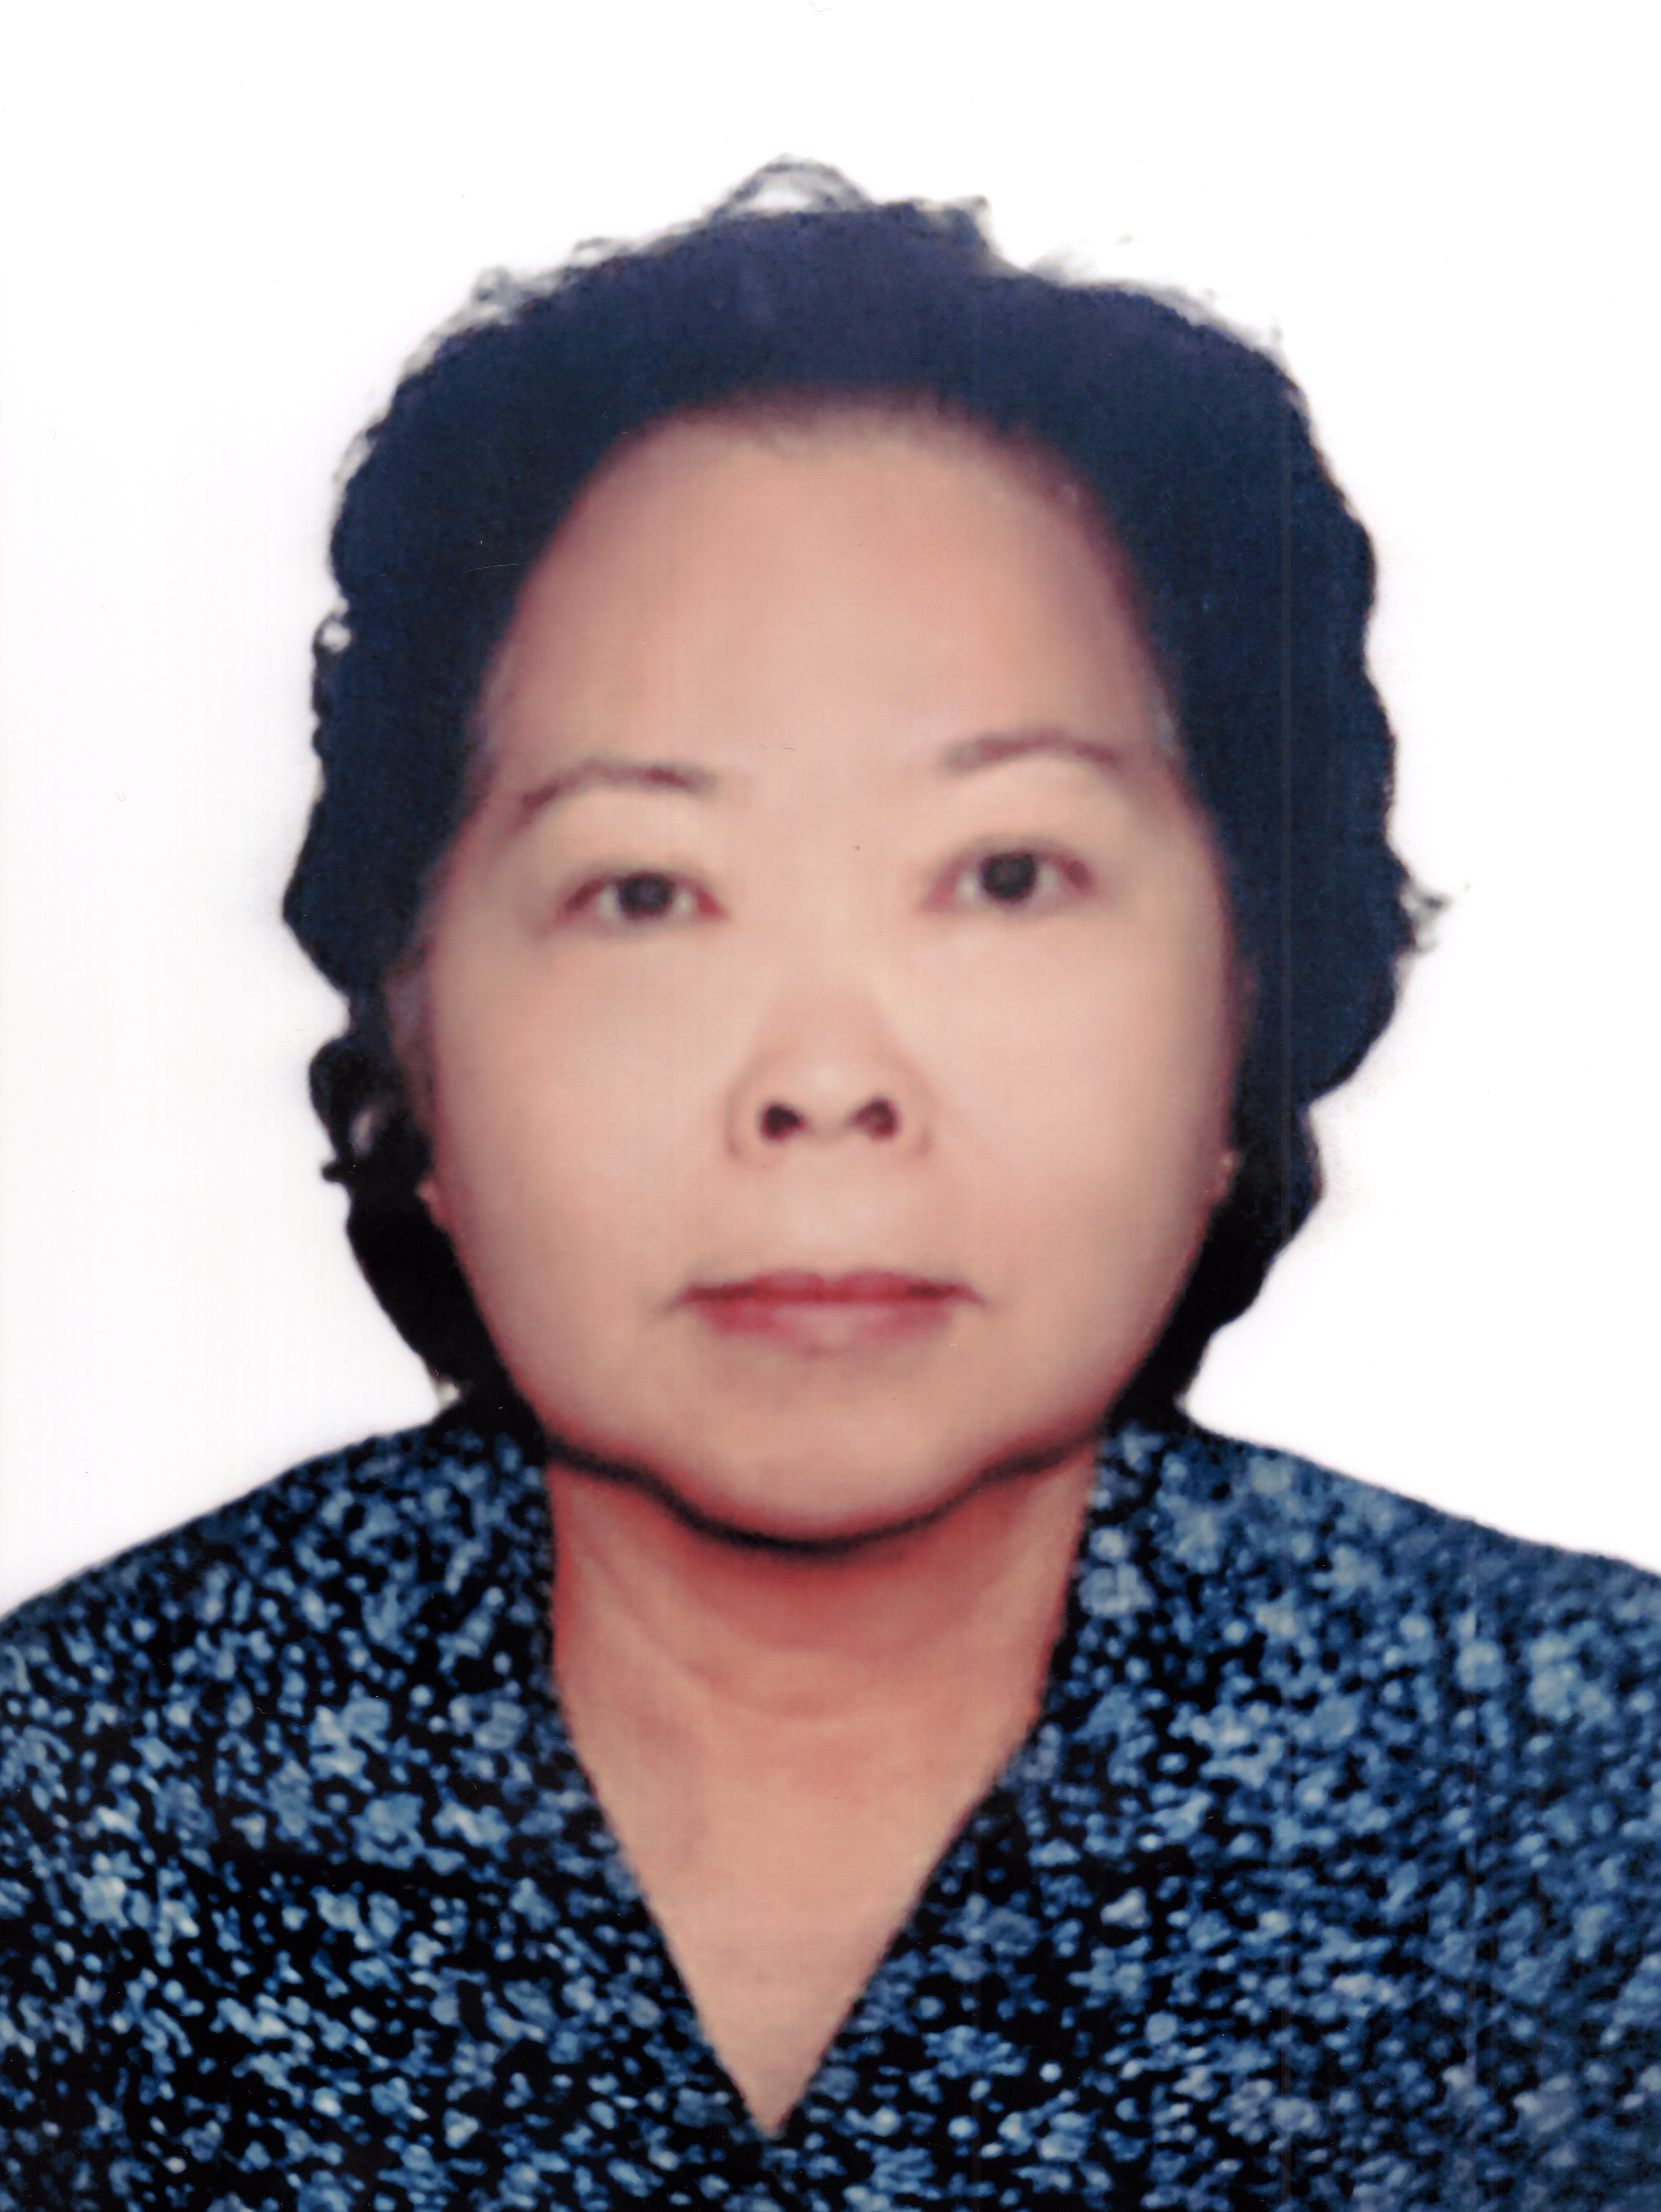 Ms. Yu Mei Chen 劉陳玉梅夫人